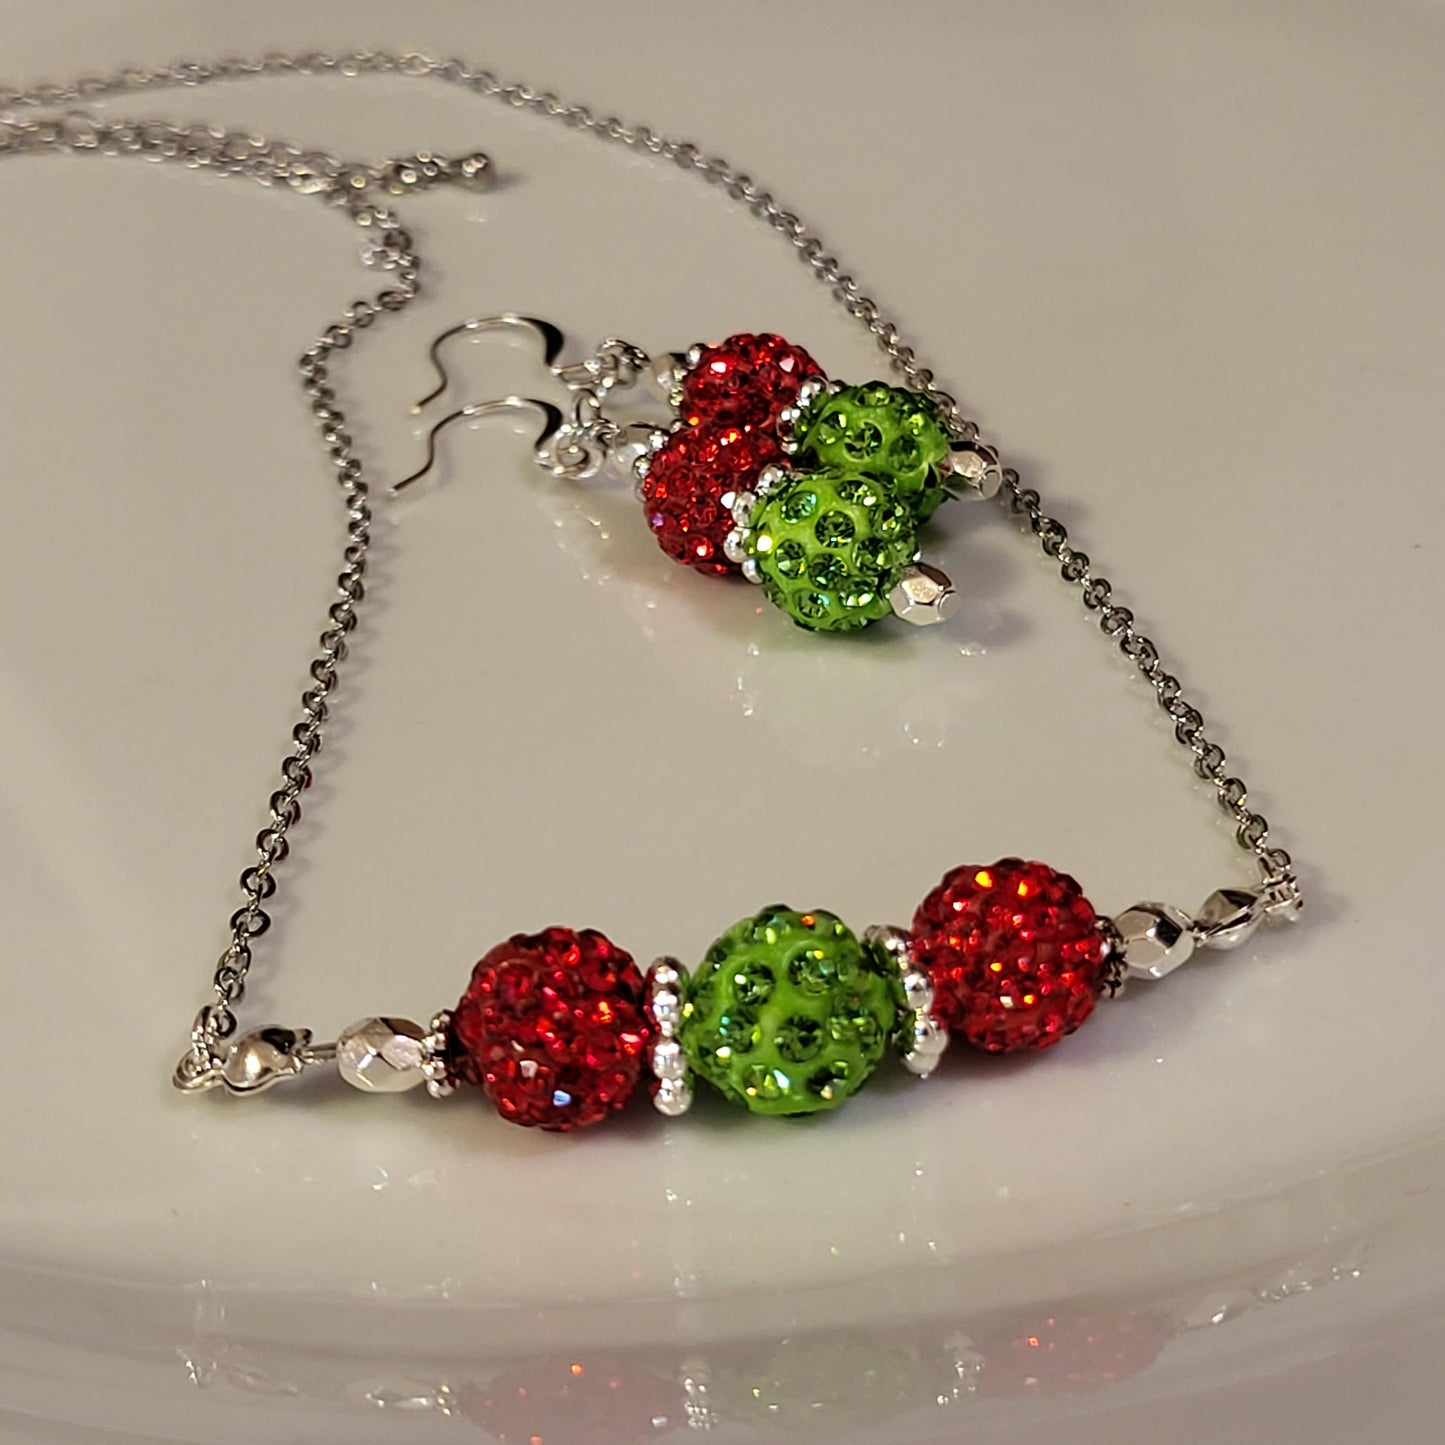 Christmas Earrings, sparkly earrings, red and green earrings